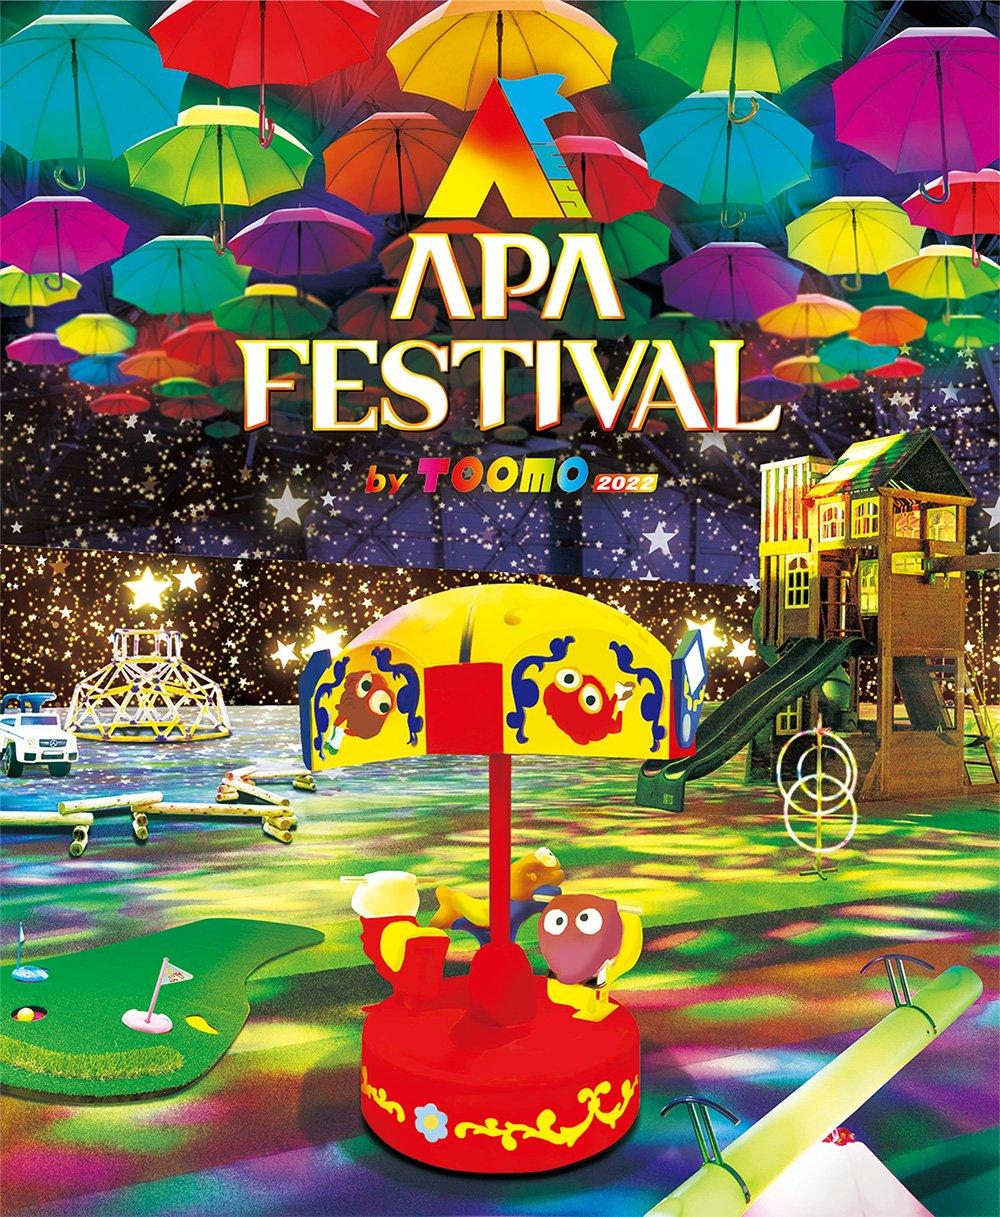 APA FESTIVAL 2022 by TOOMO